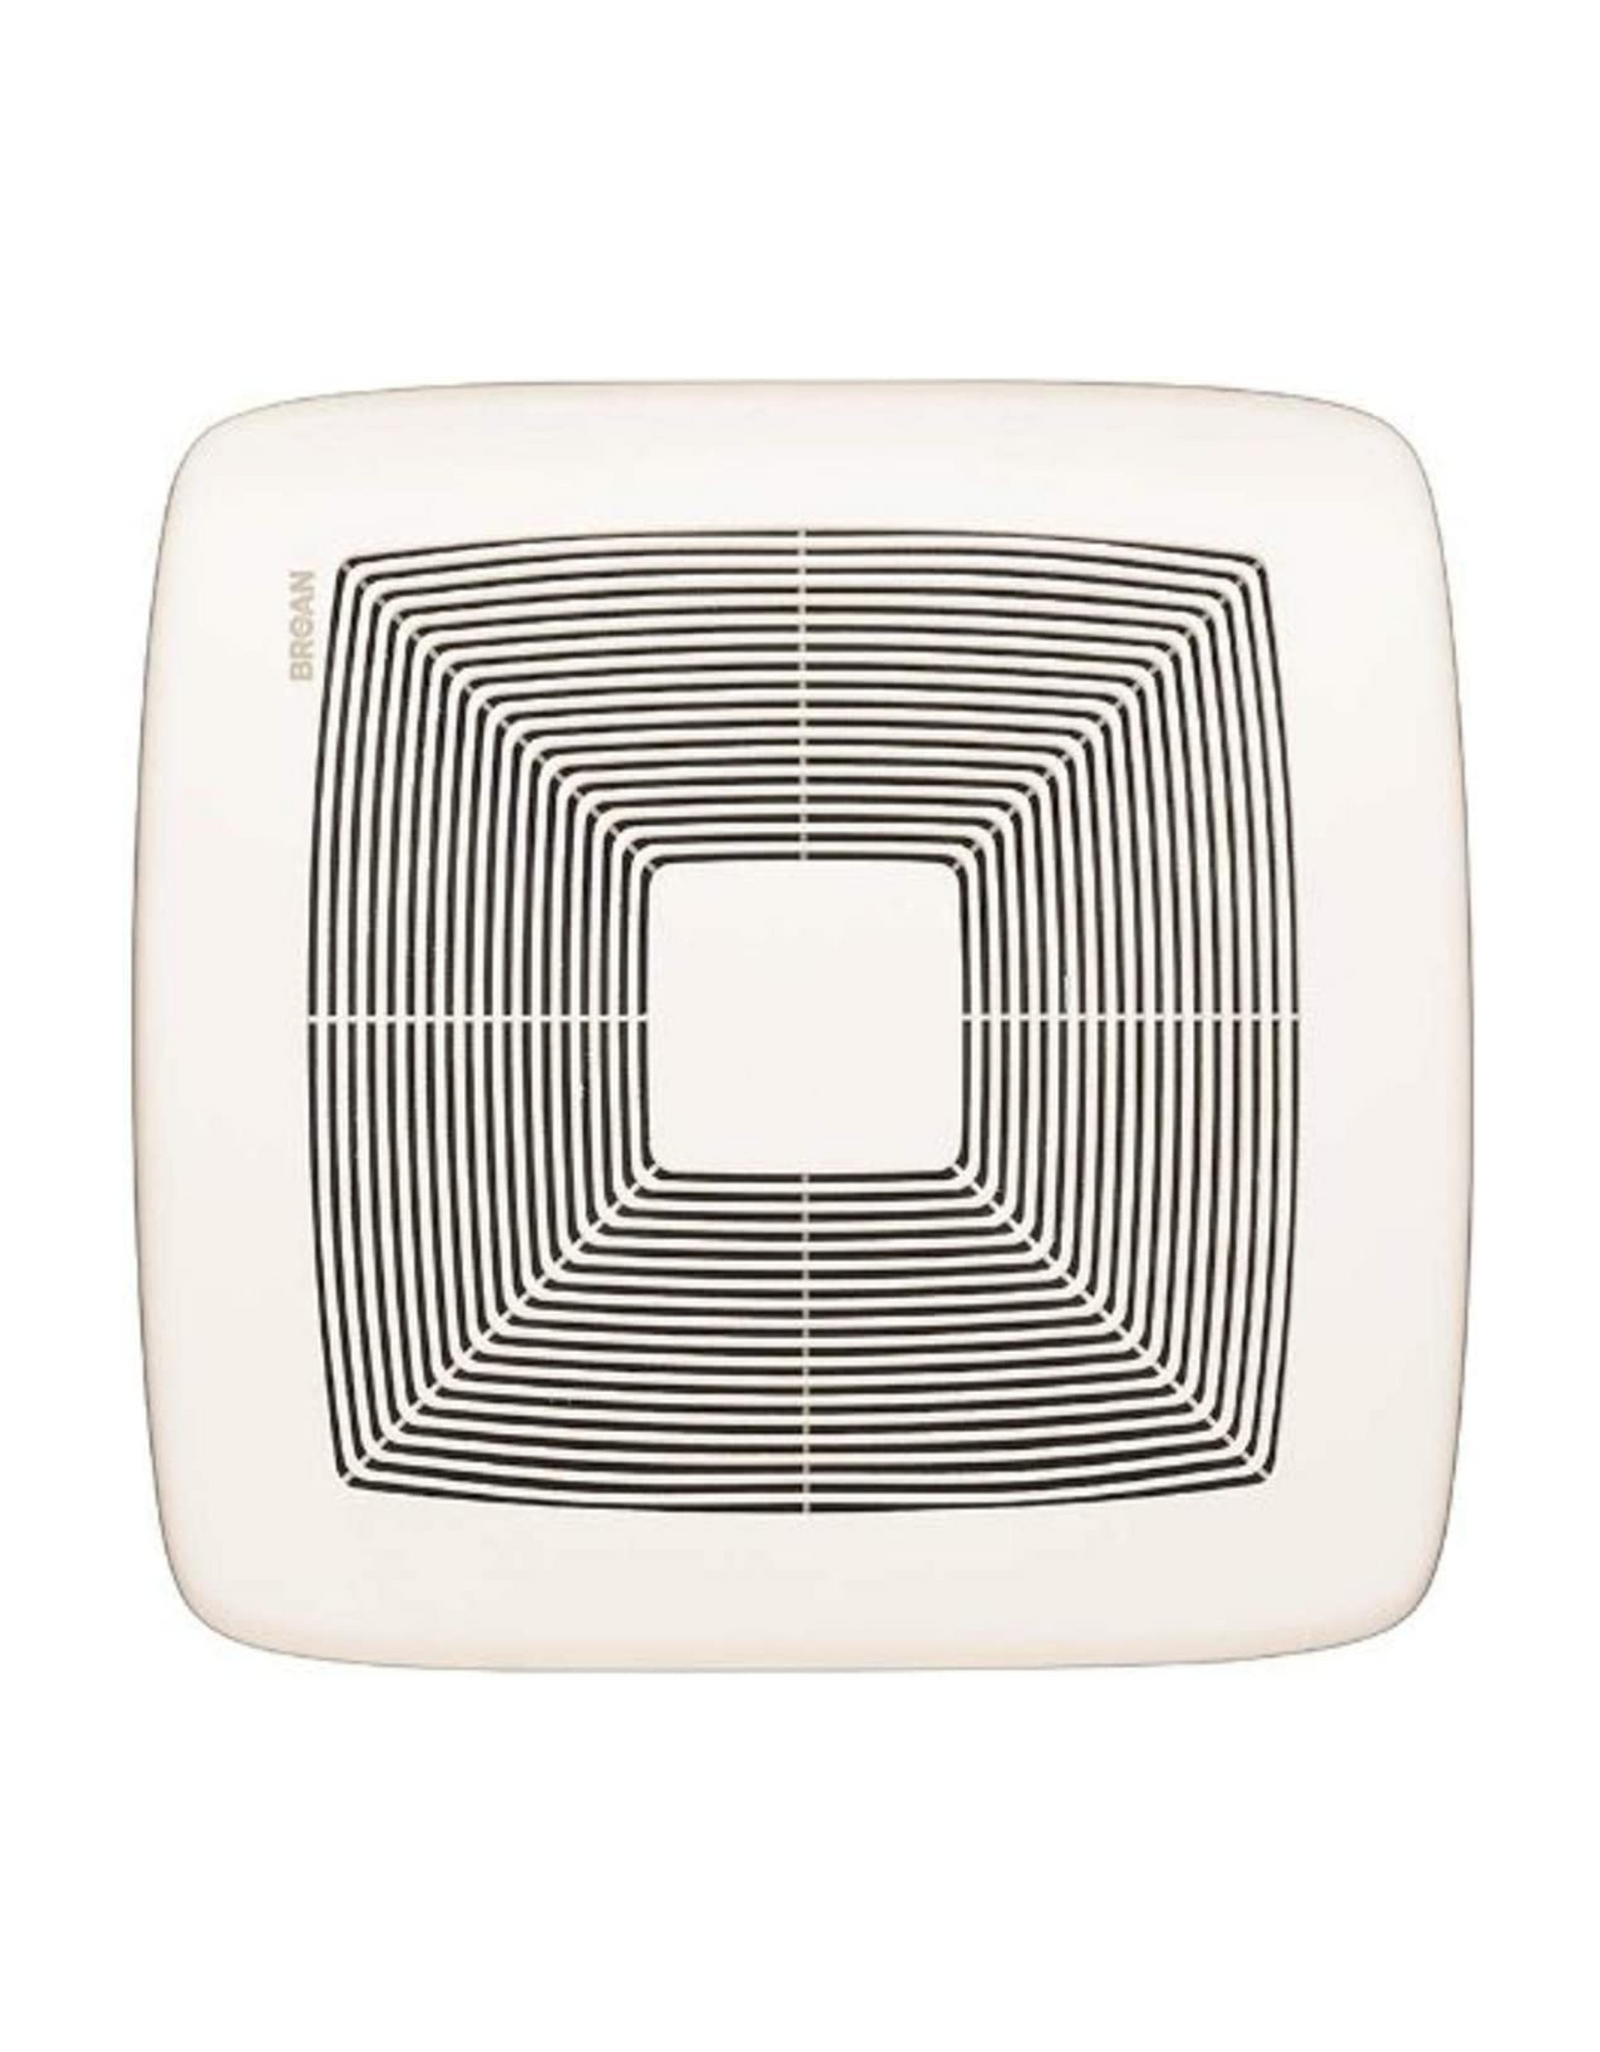 Broan-Nutone QTXE150 Ultra-Silent Ventilation Fan, 150 CFM, 1.4 Sones, White